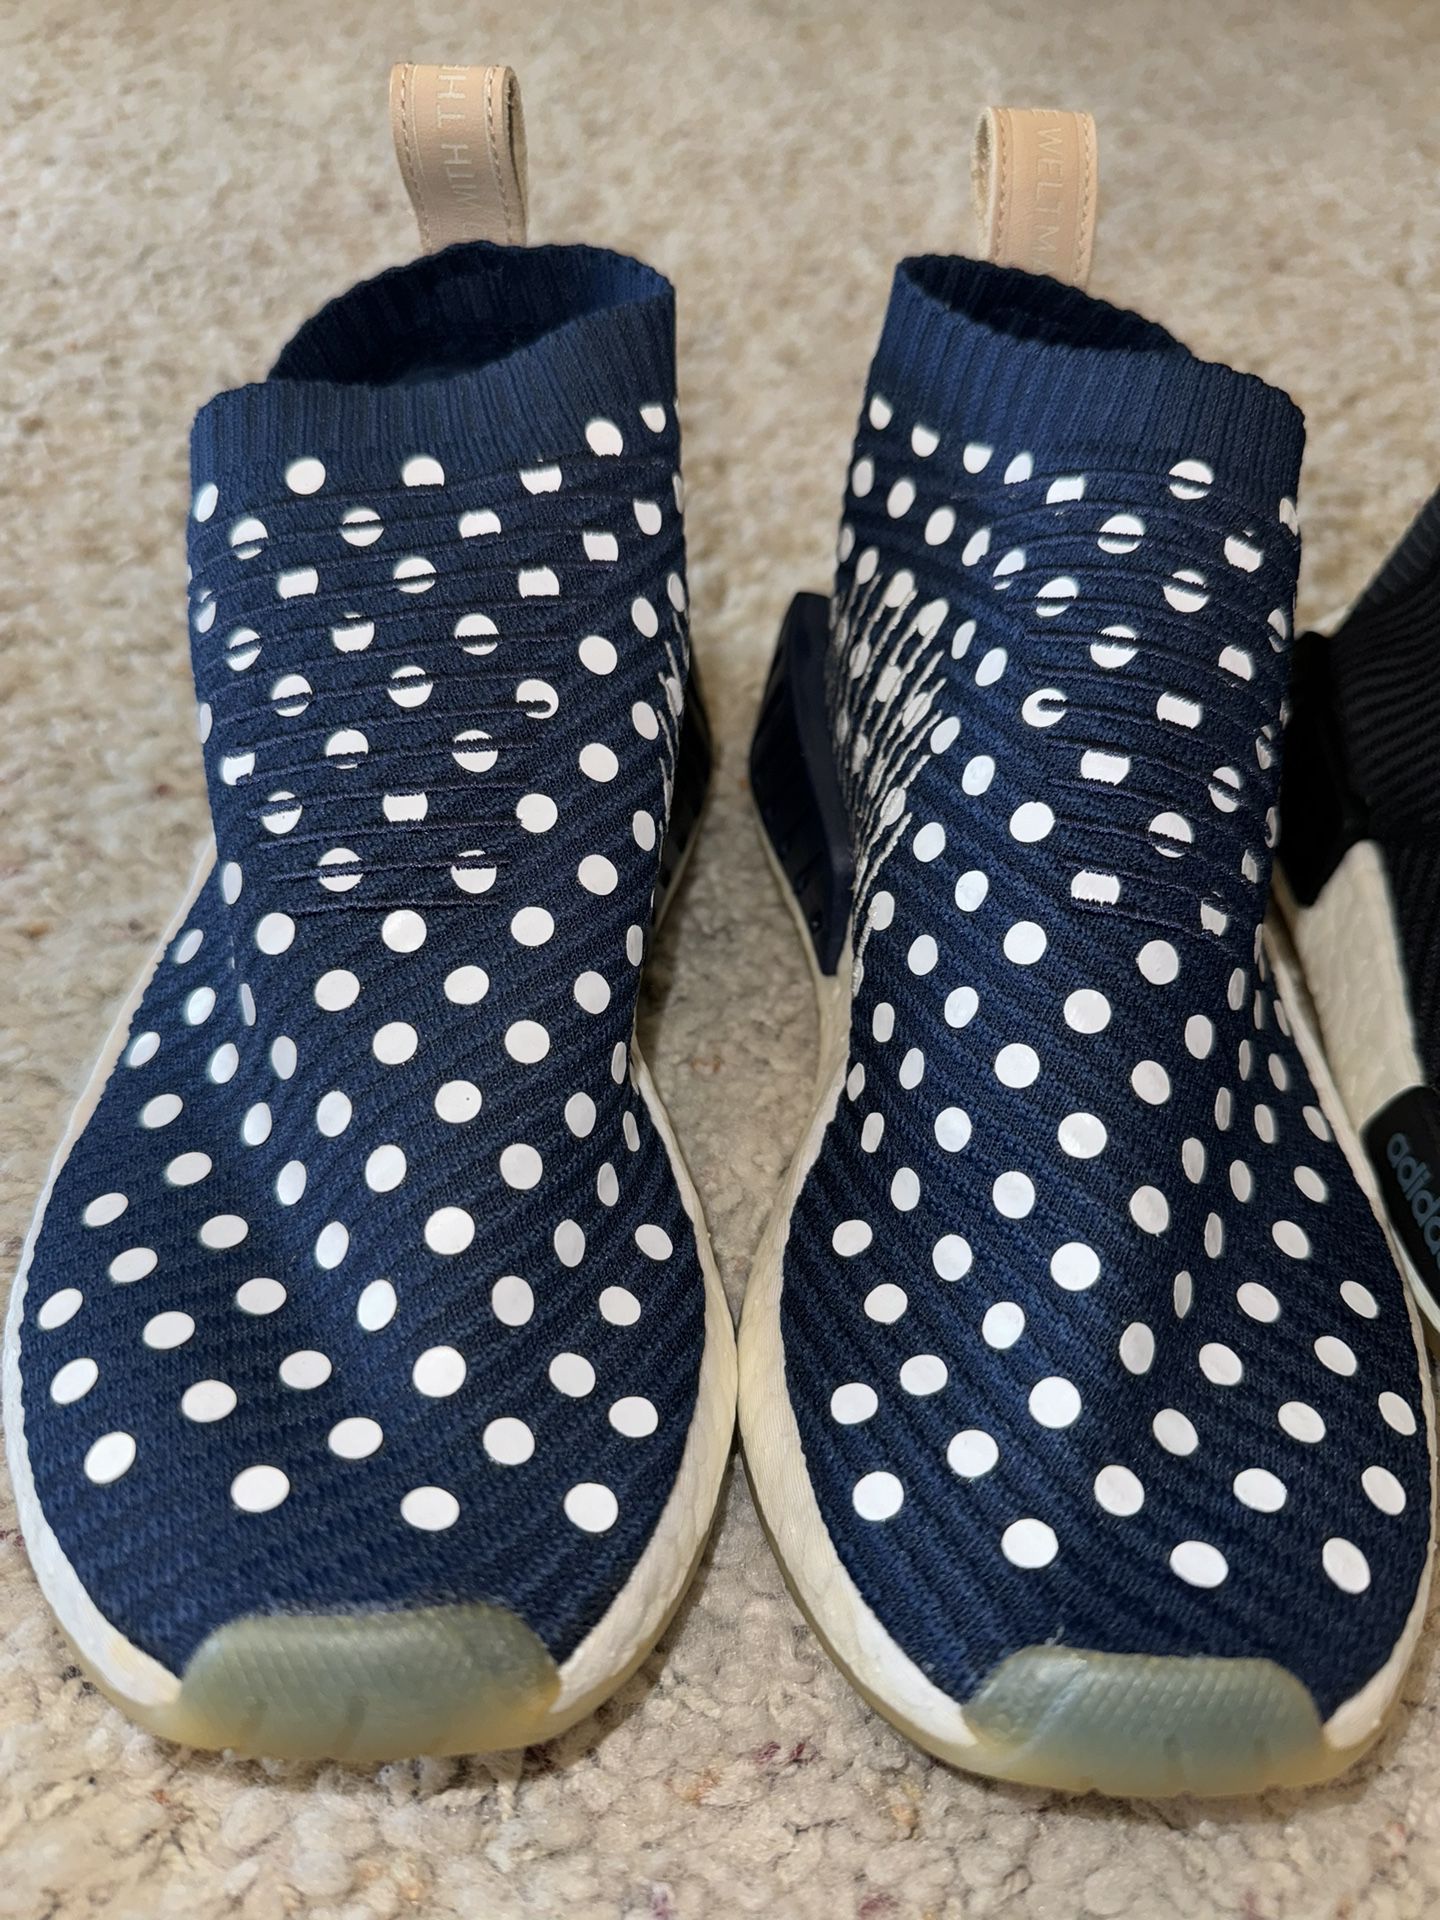 Adidas Nmd City Sock Blue Size 7.5 